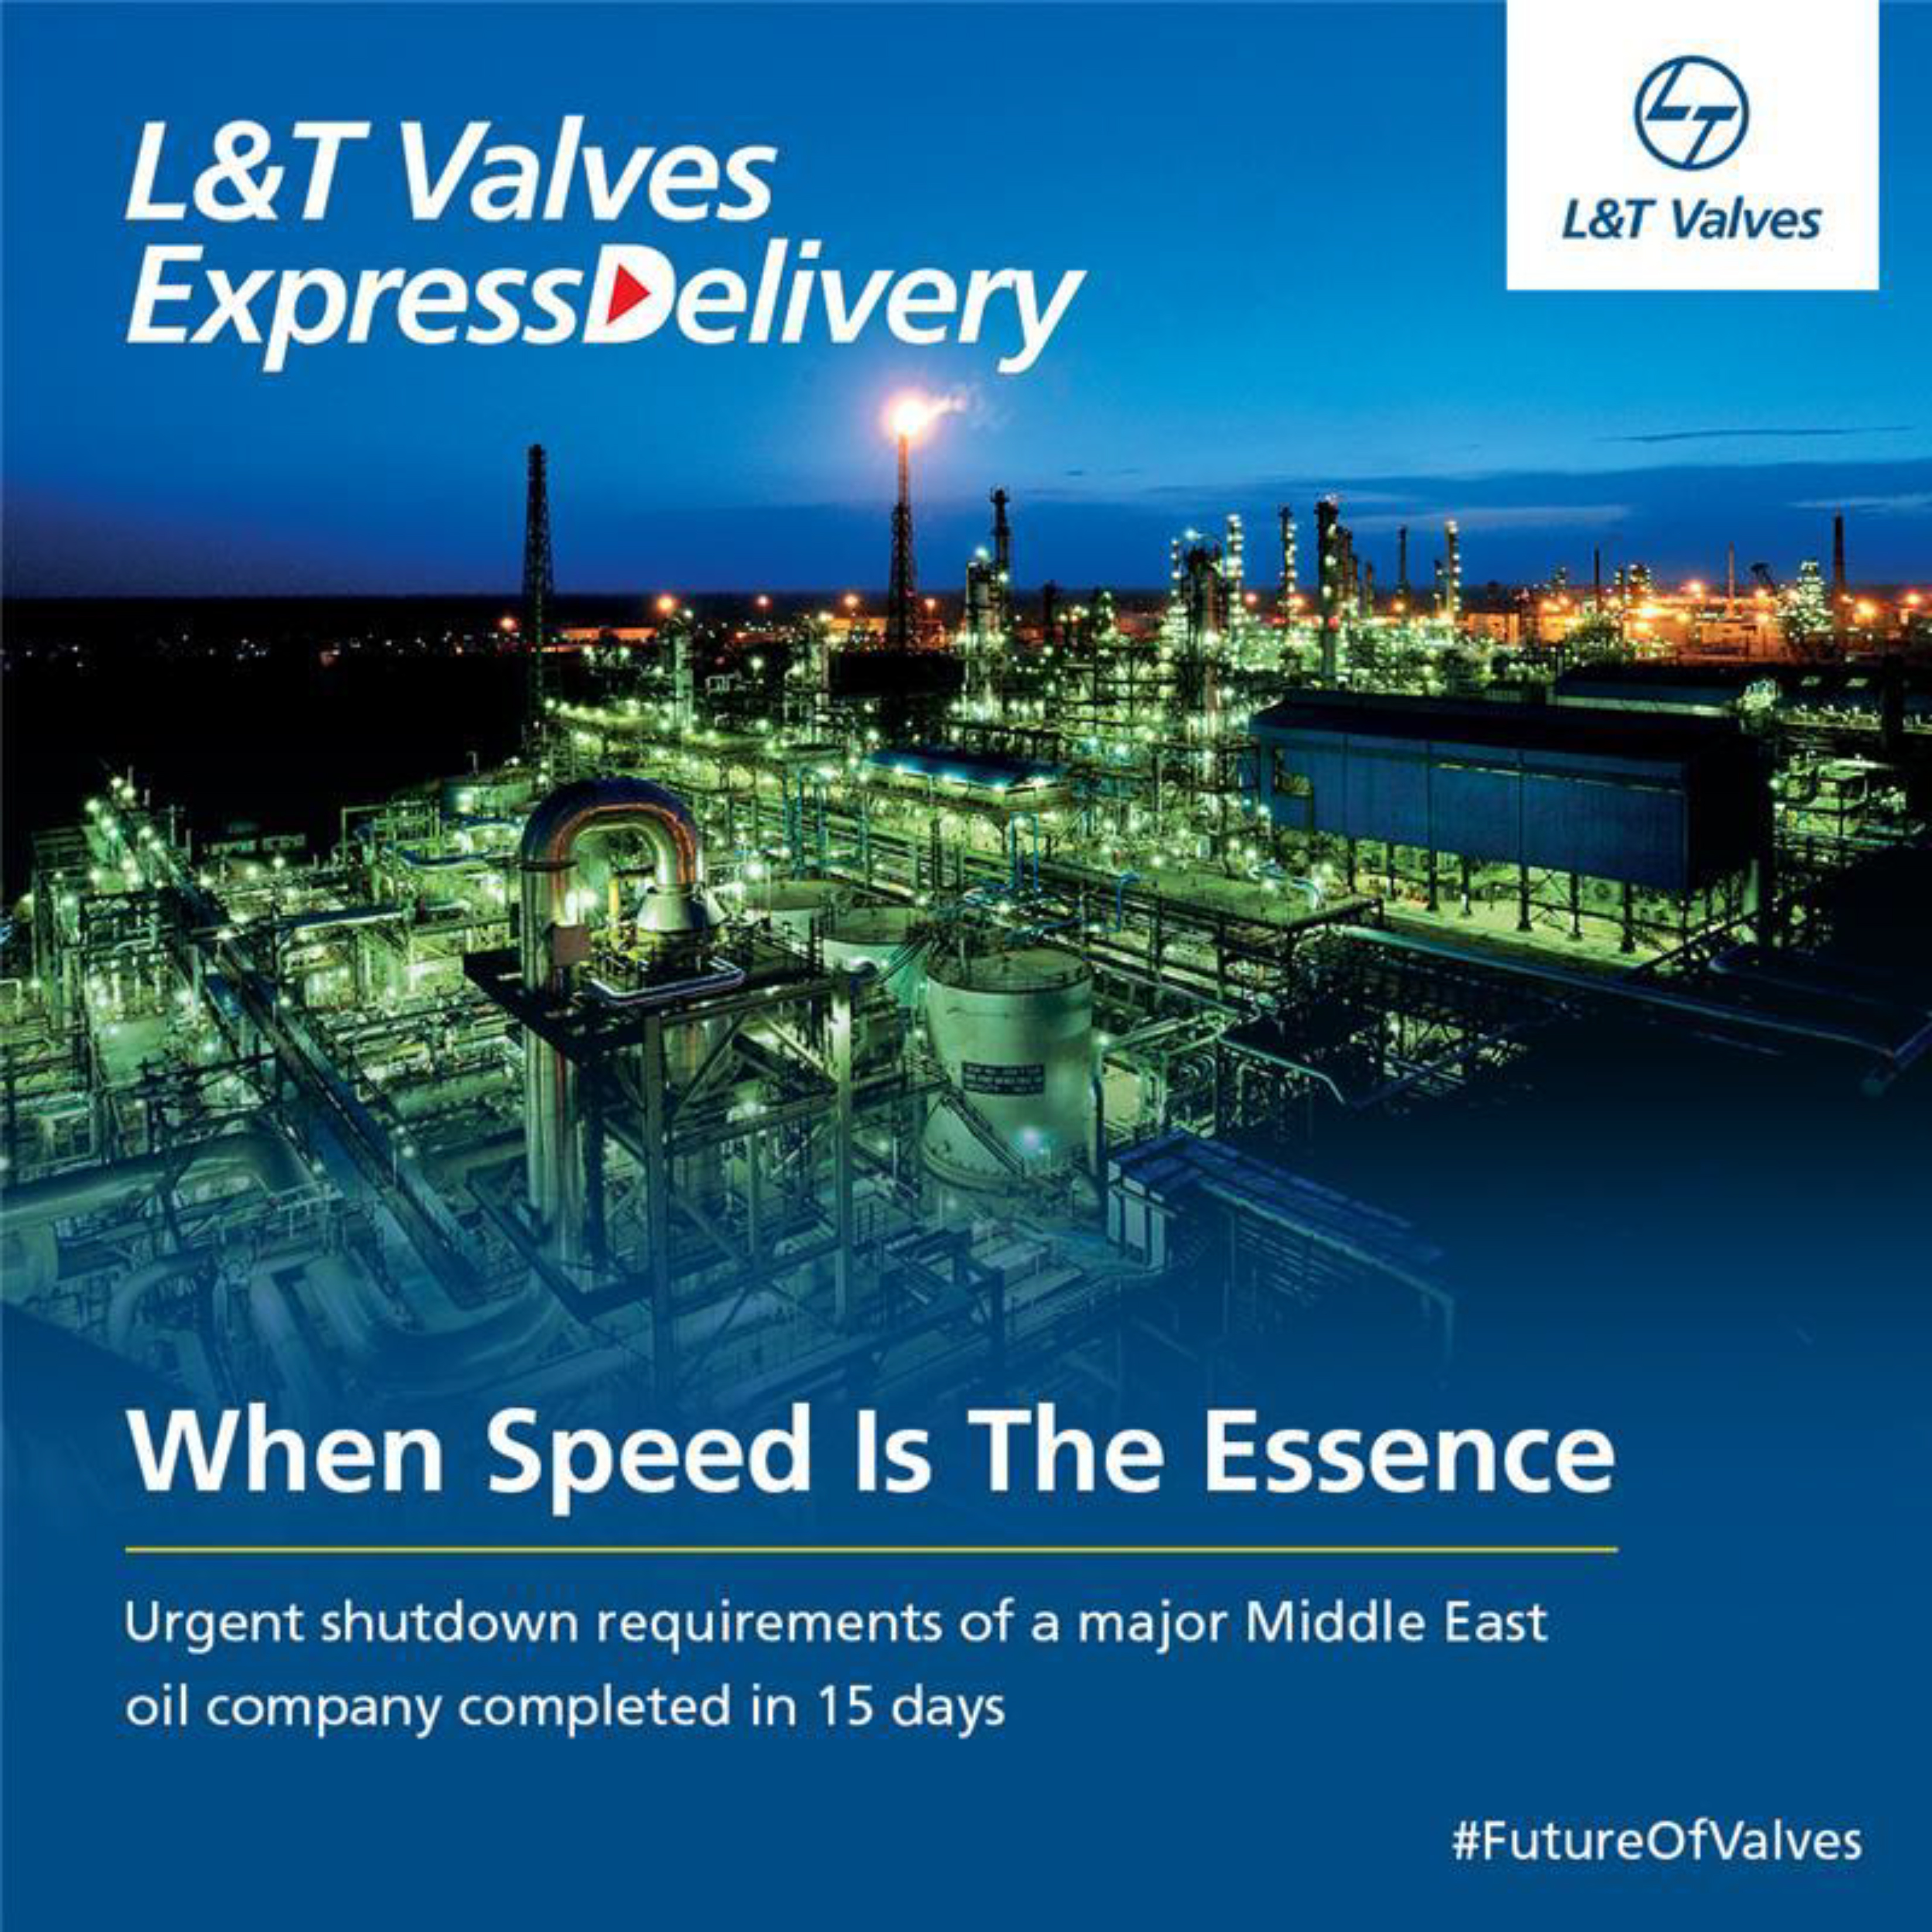 L&T Valves Express Delivery